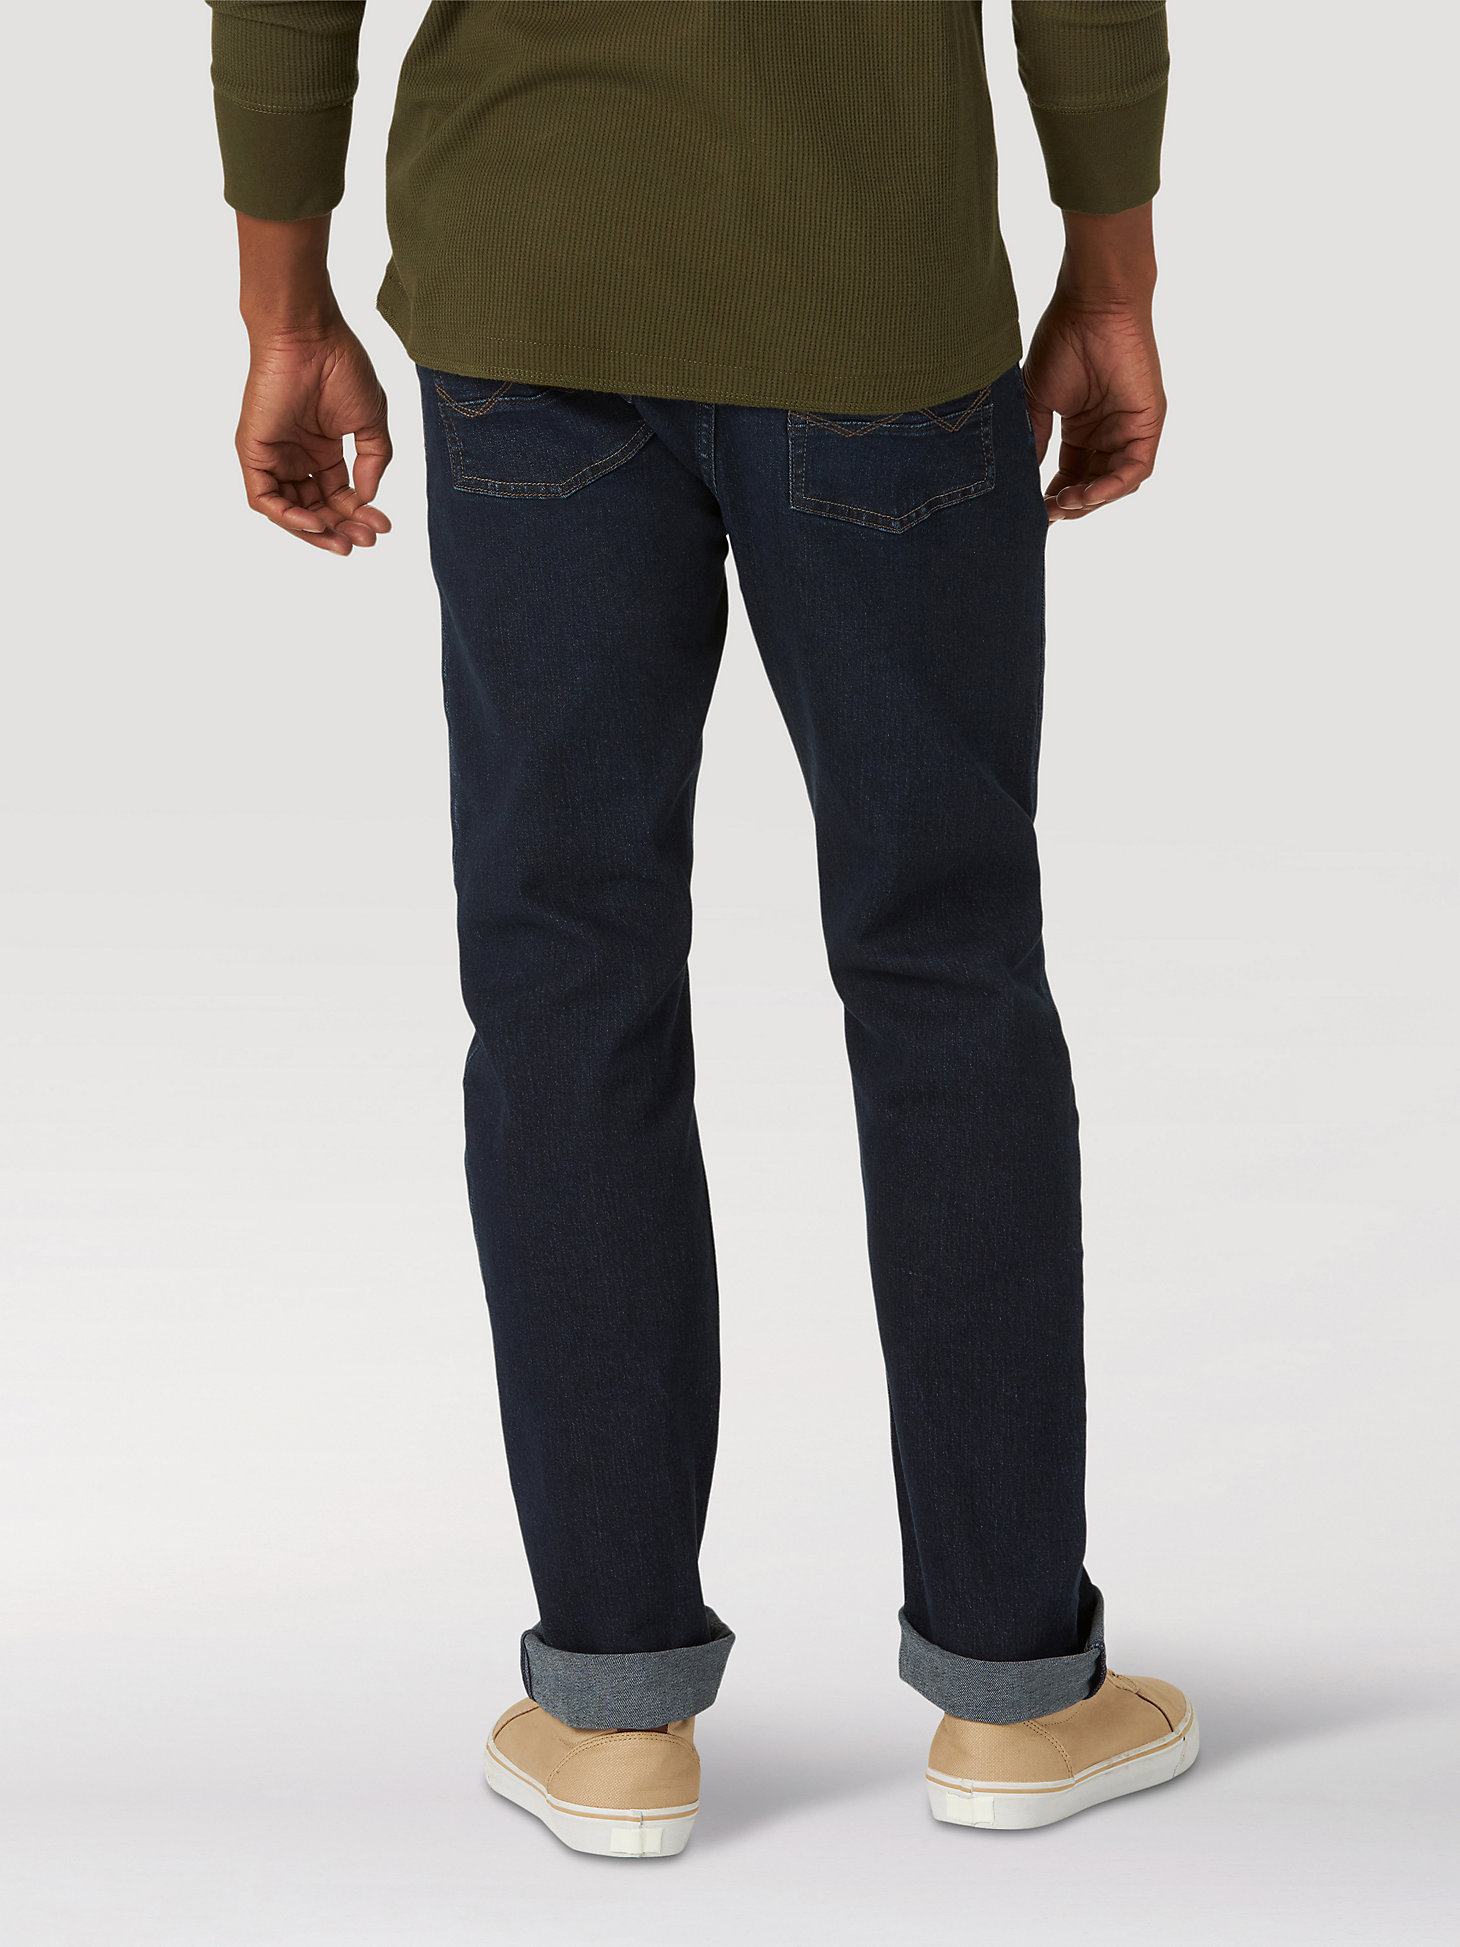 Men's Five Star Premium Slim Straight Jean in Dark Colbalt alternative view 1